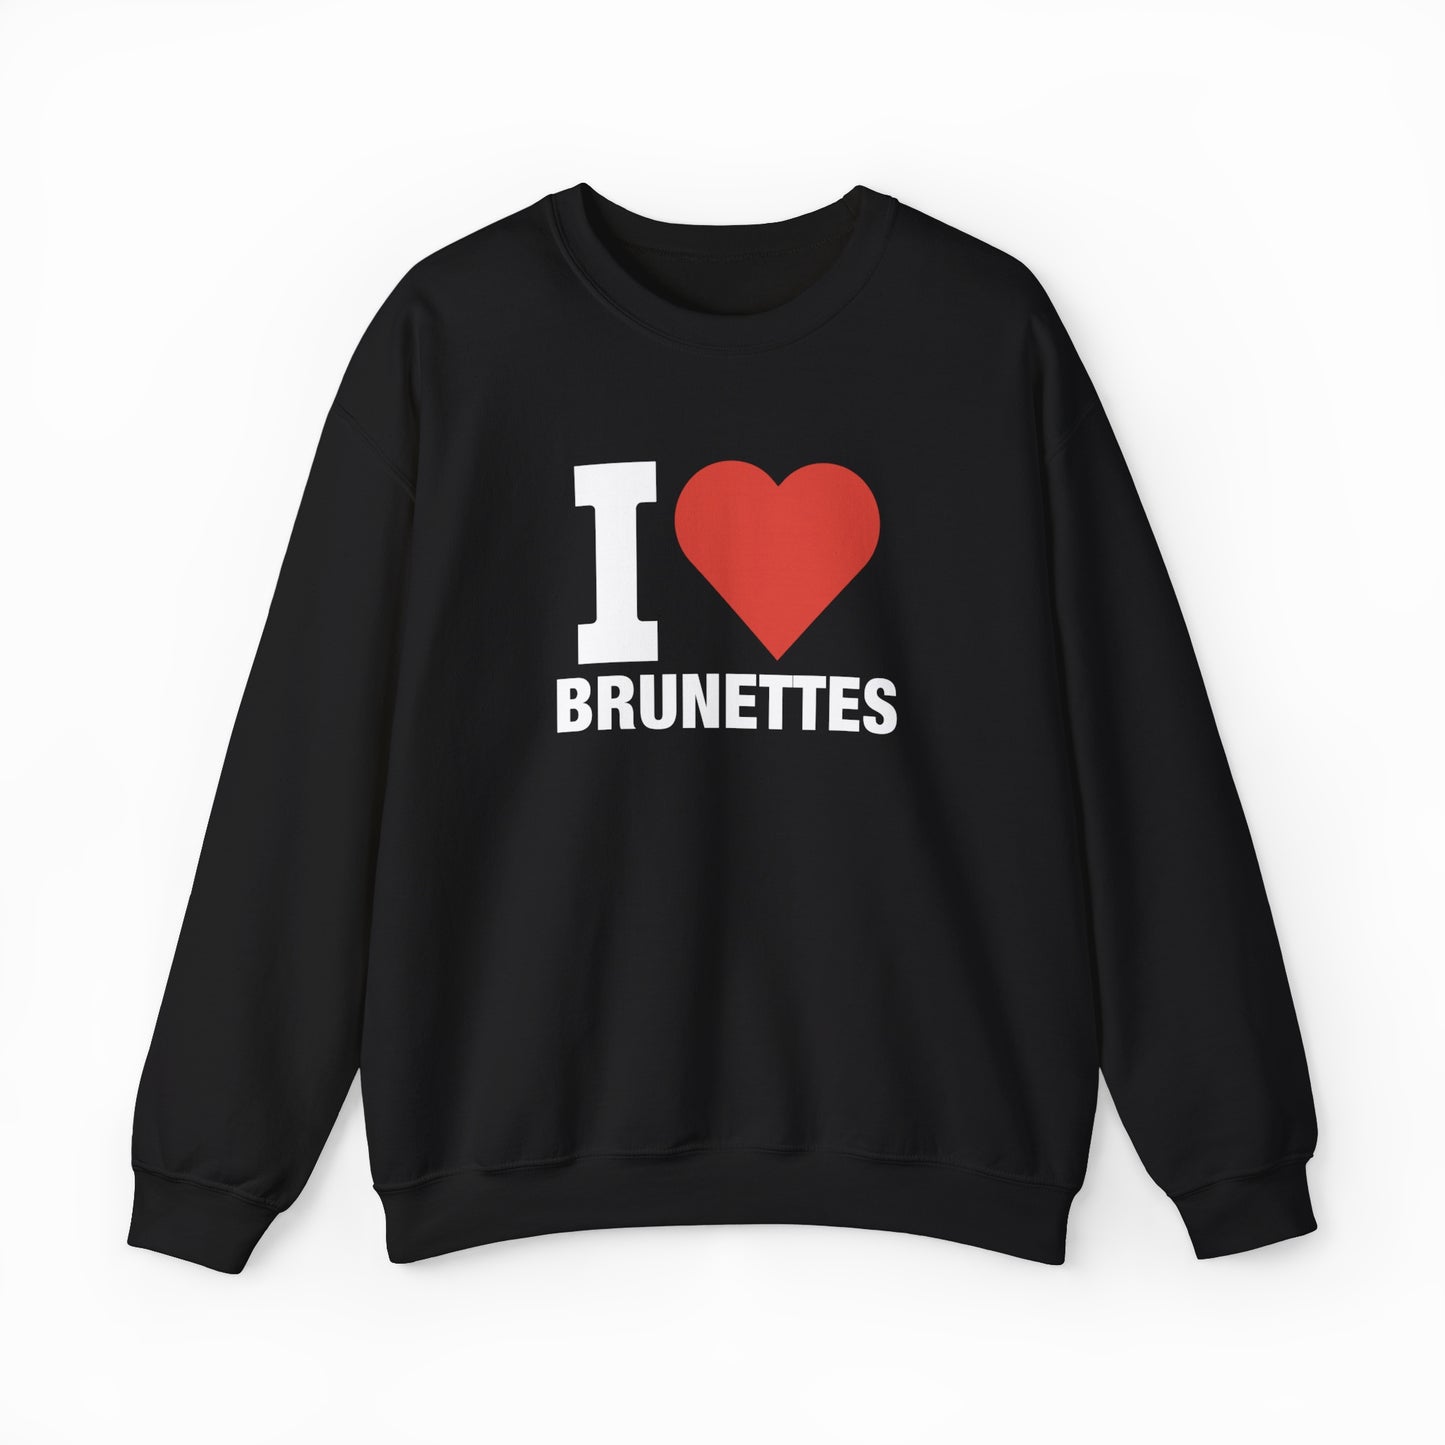 I Heart Brunettes Crewneck